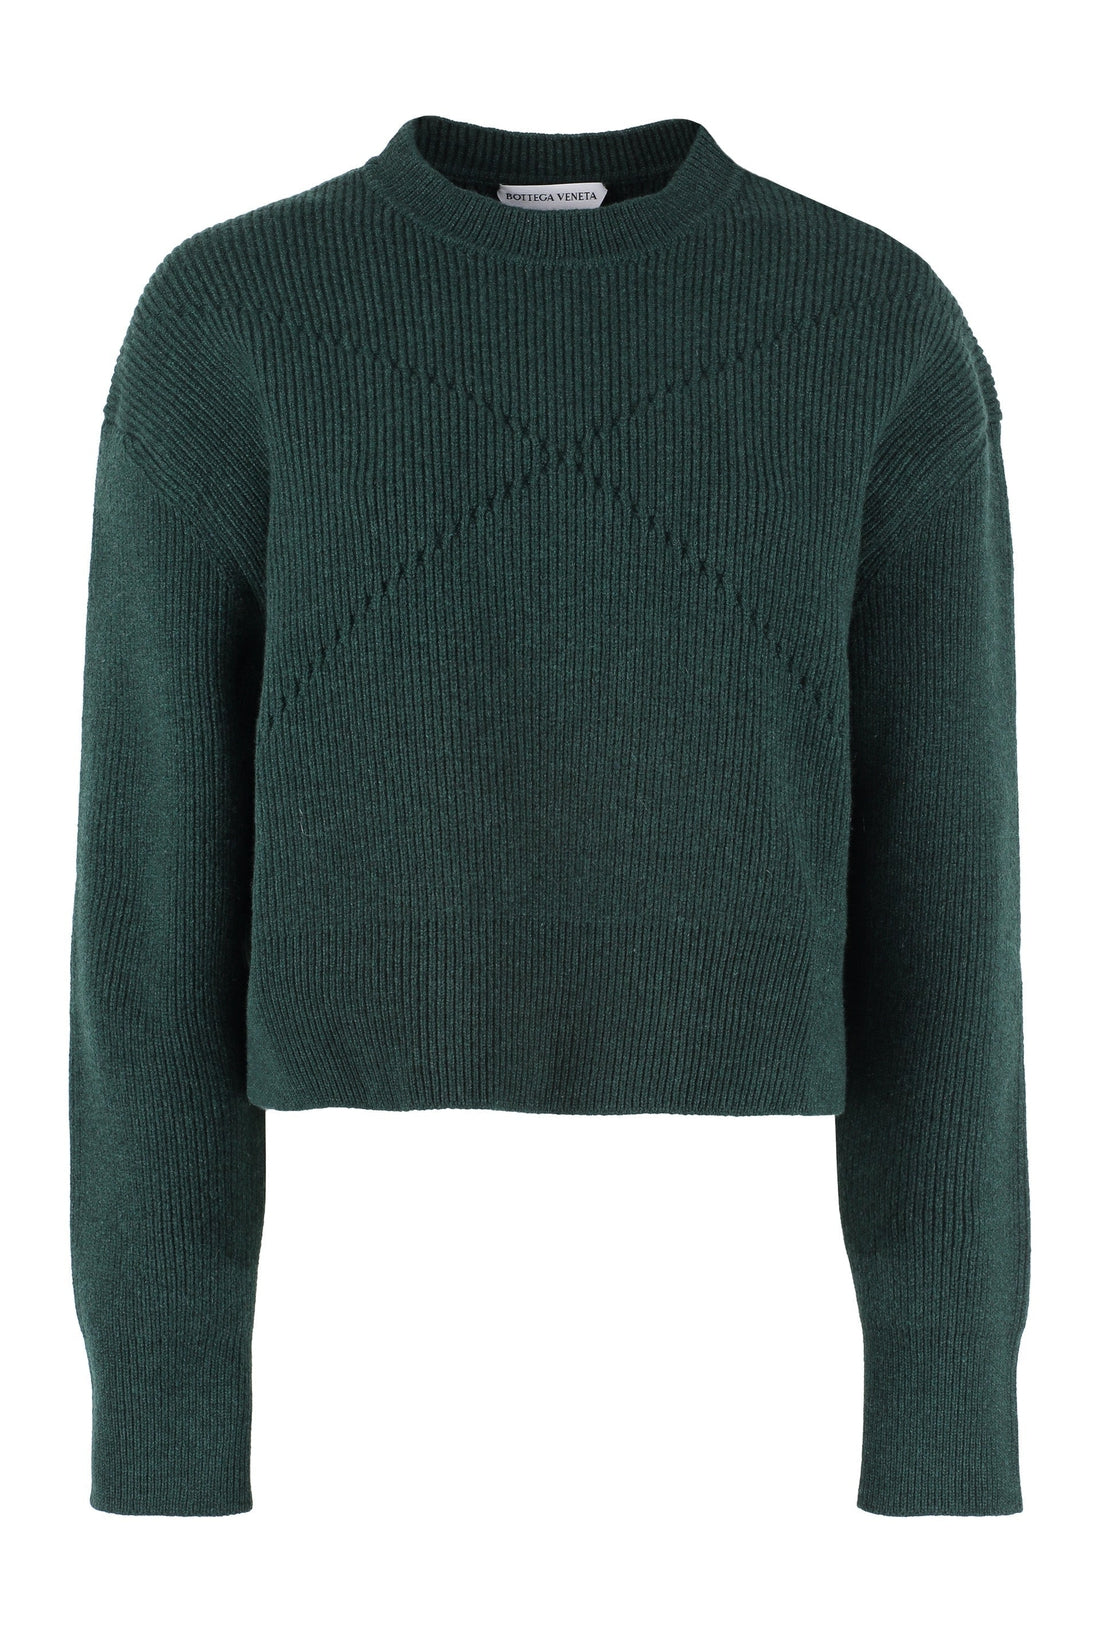 Bottega Veneta-OUTLET-SALE-Ribbed cashmere sweater-ARCHIVIST